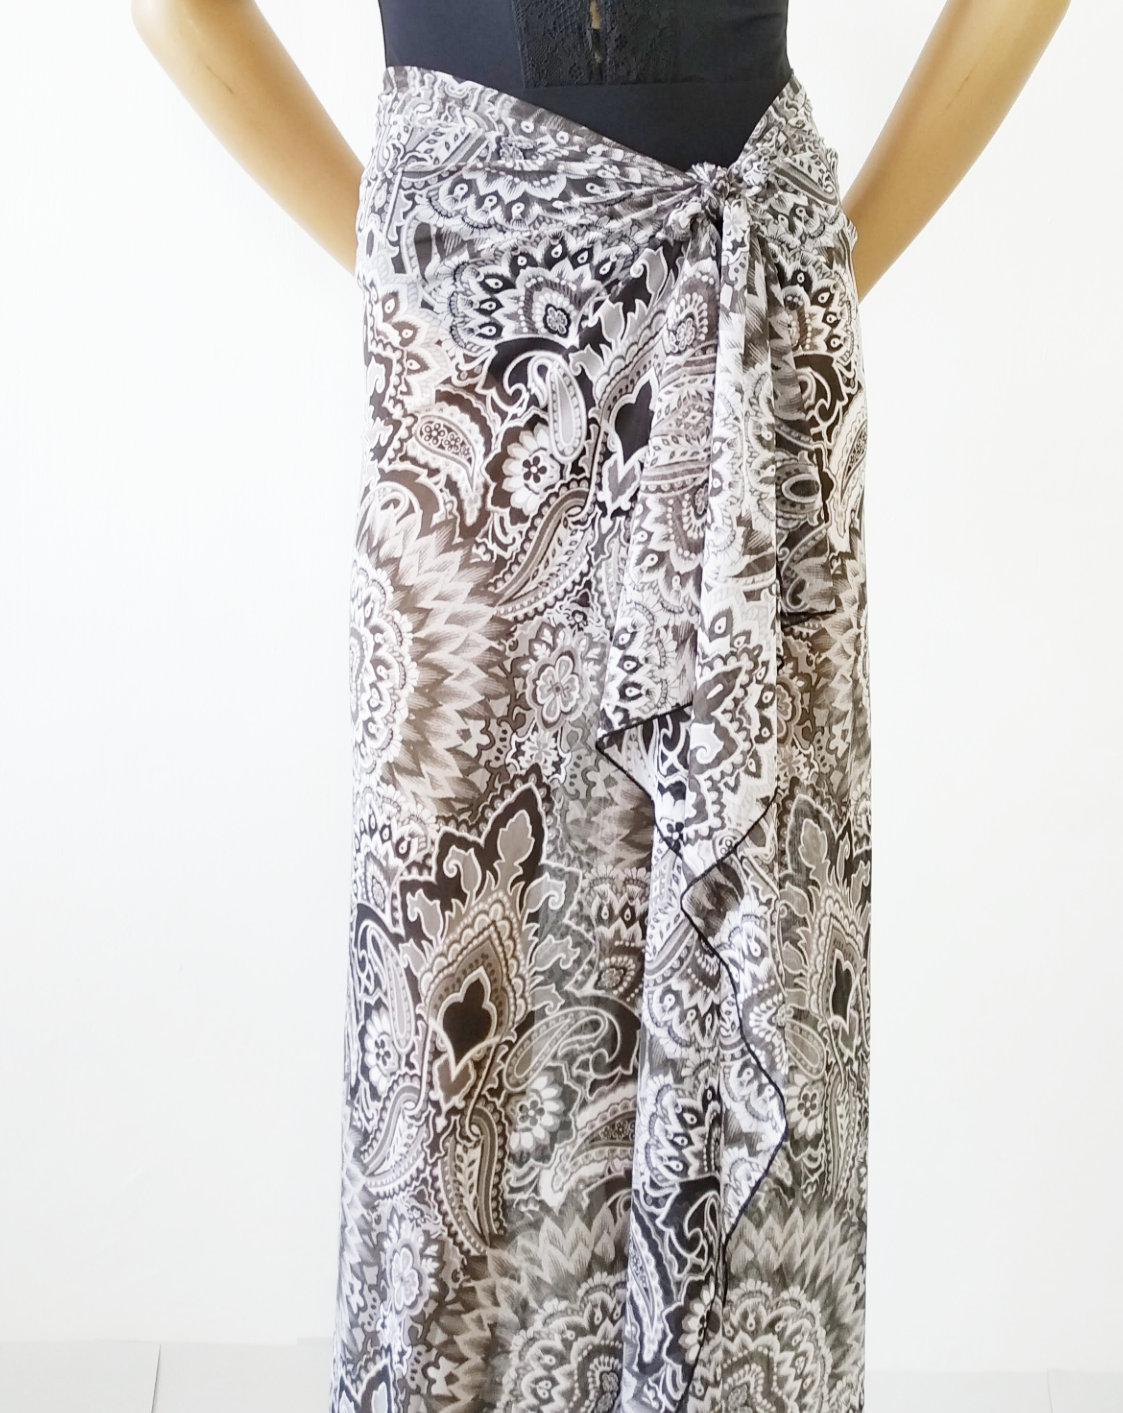 Maxi sarong in stretch lycra veil with floral mosaic print  Black / White, tied around the waist as a long maxi skirt. Bikinn.com